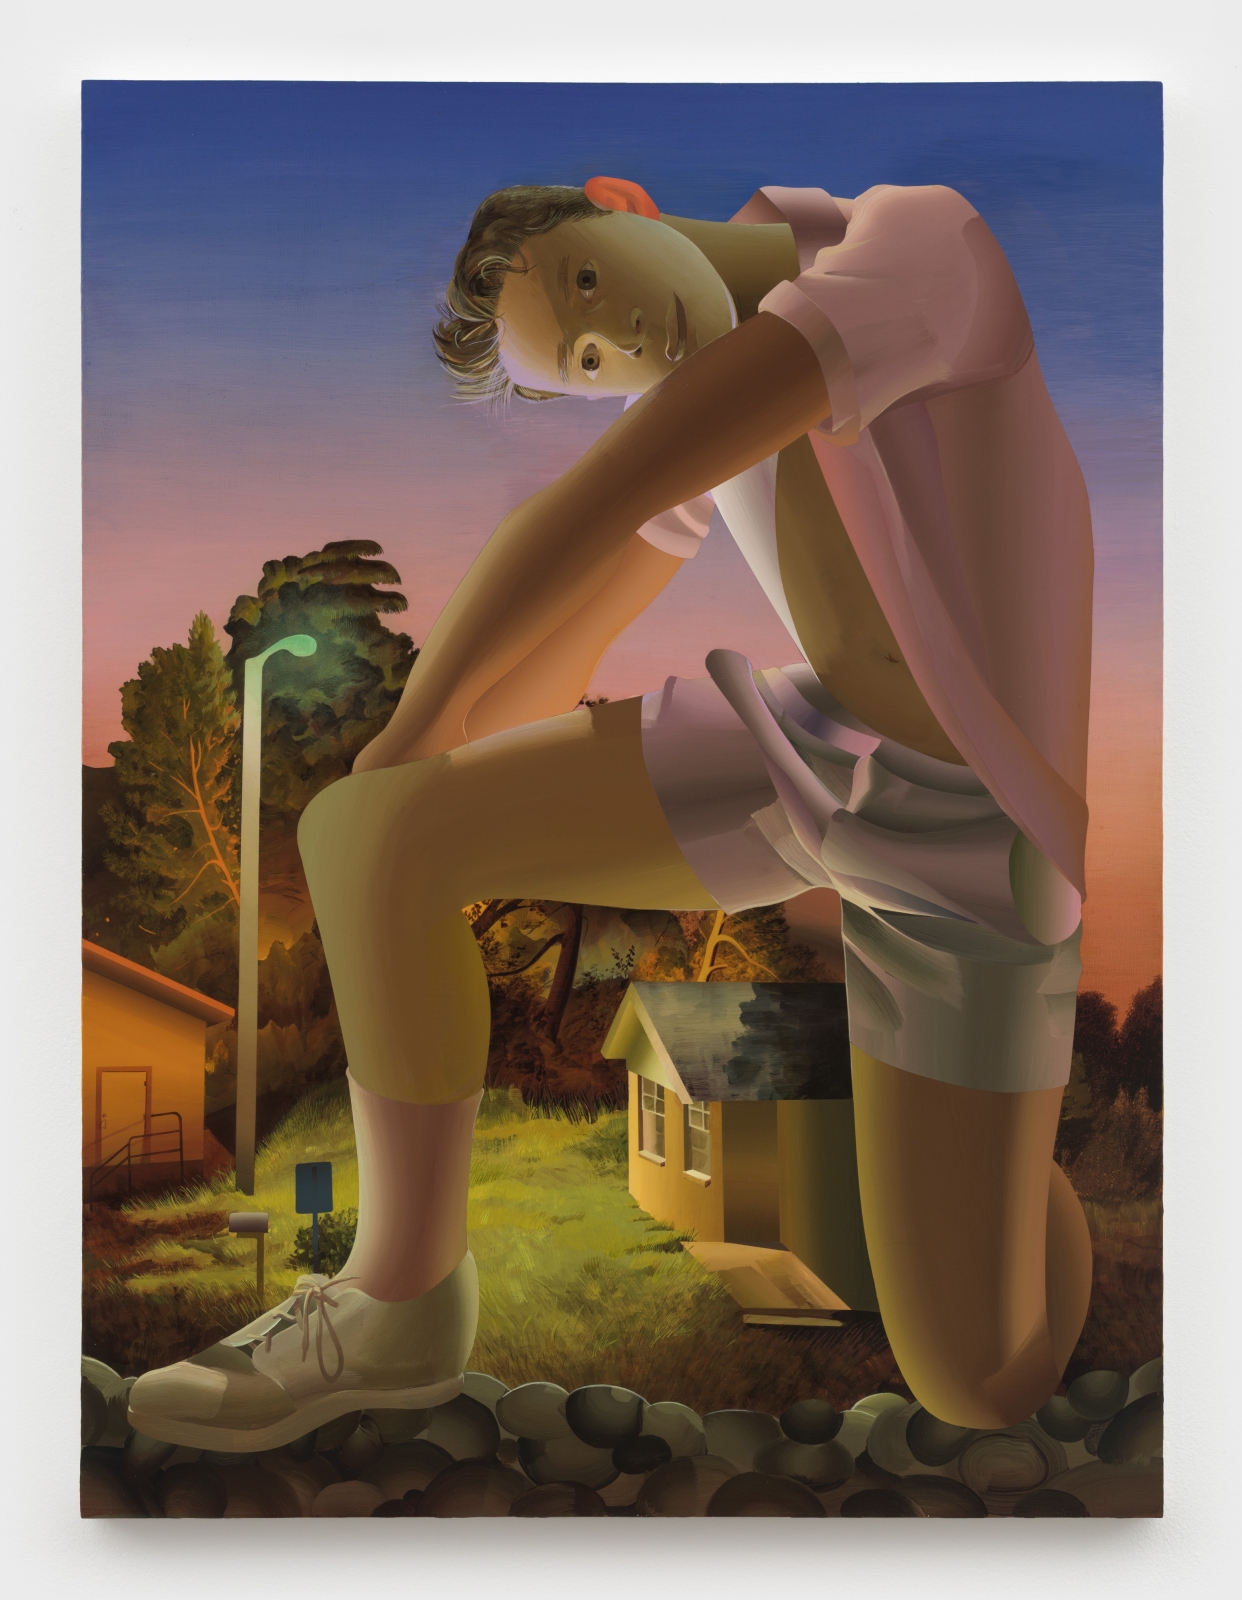 Kyle Dunn
Outskirts, 2021
acrylic on wood panel
40 x 30 ins.
101.6 x 76.2 cm